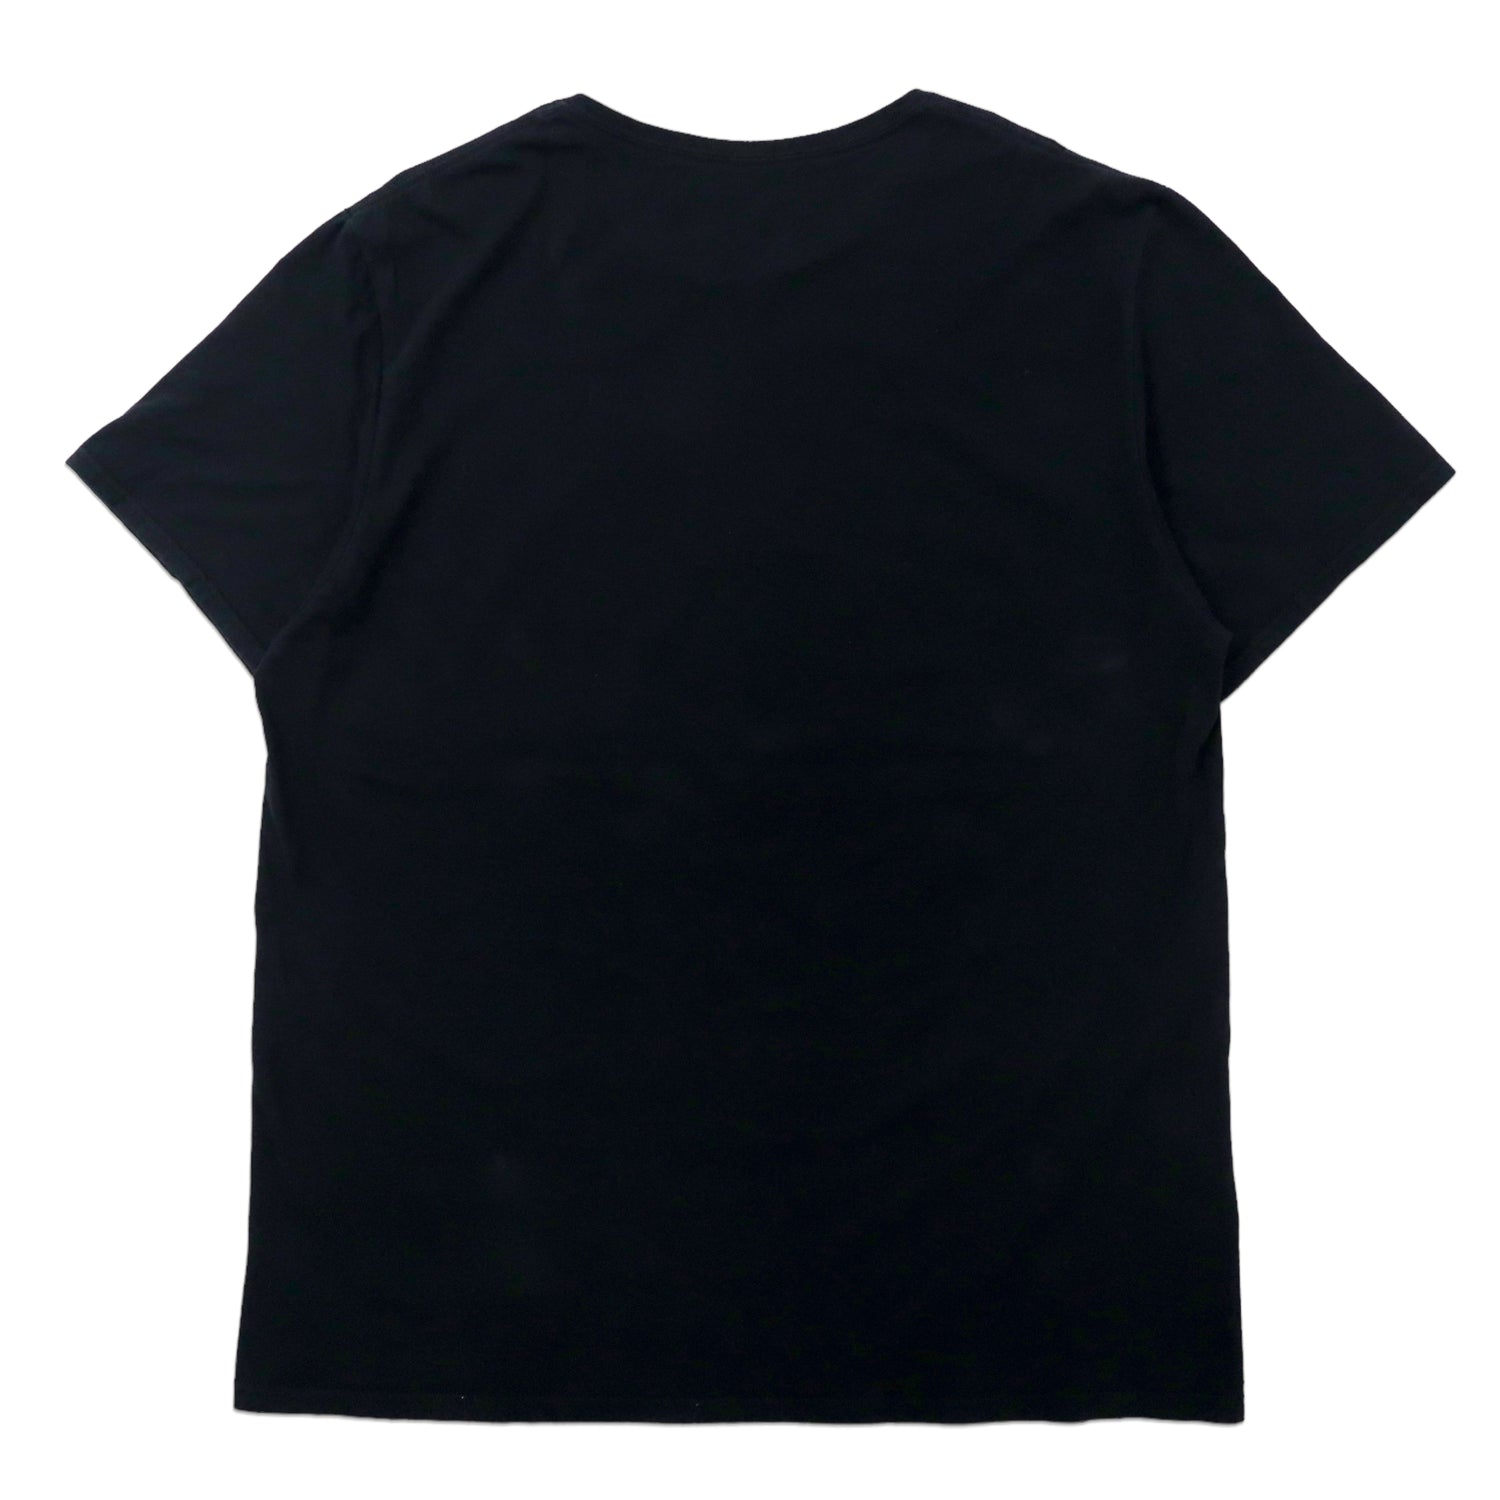 AC/DC Band T -shirt XL Black Cotton High Voltage Big Size – 日本然 